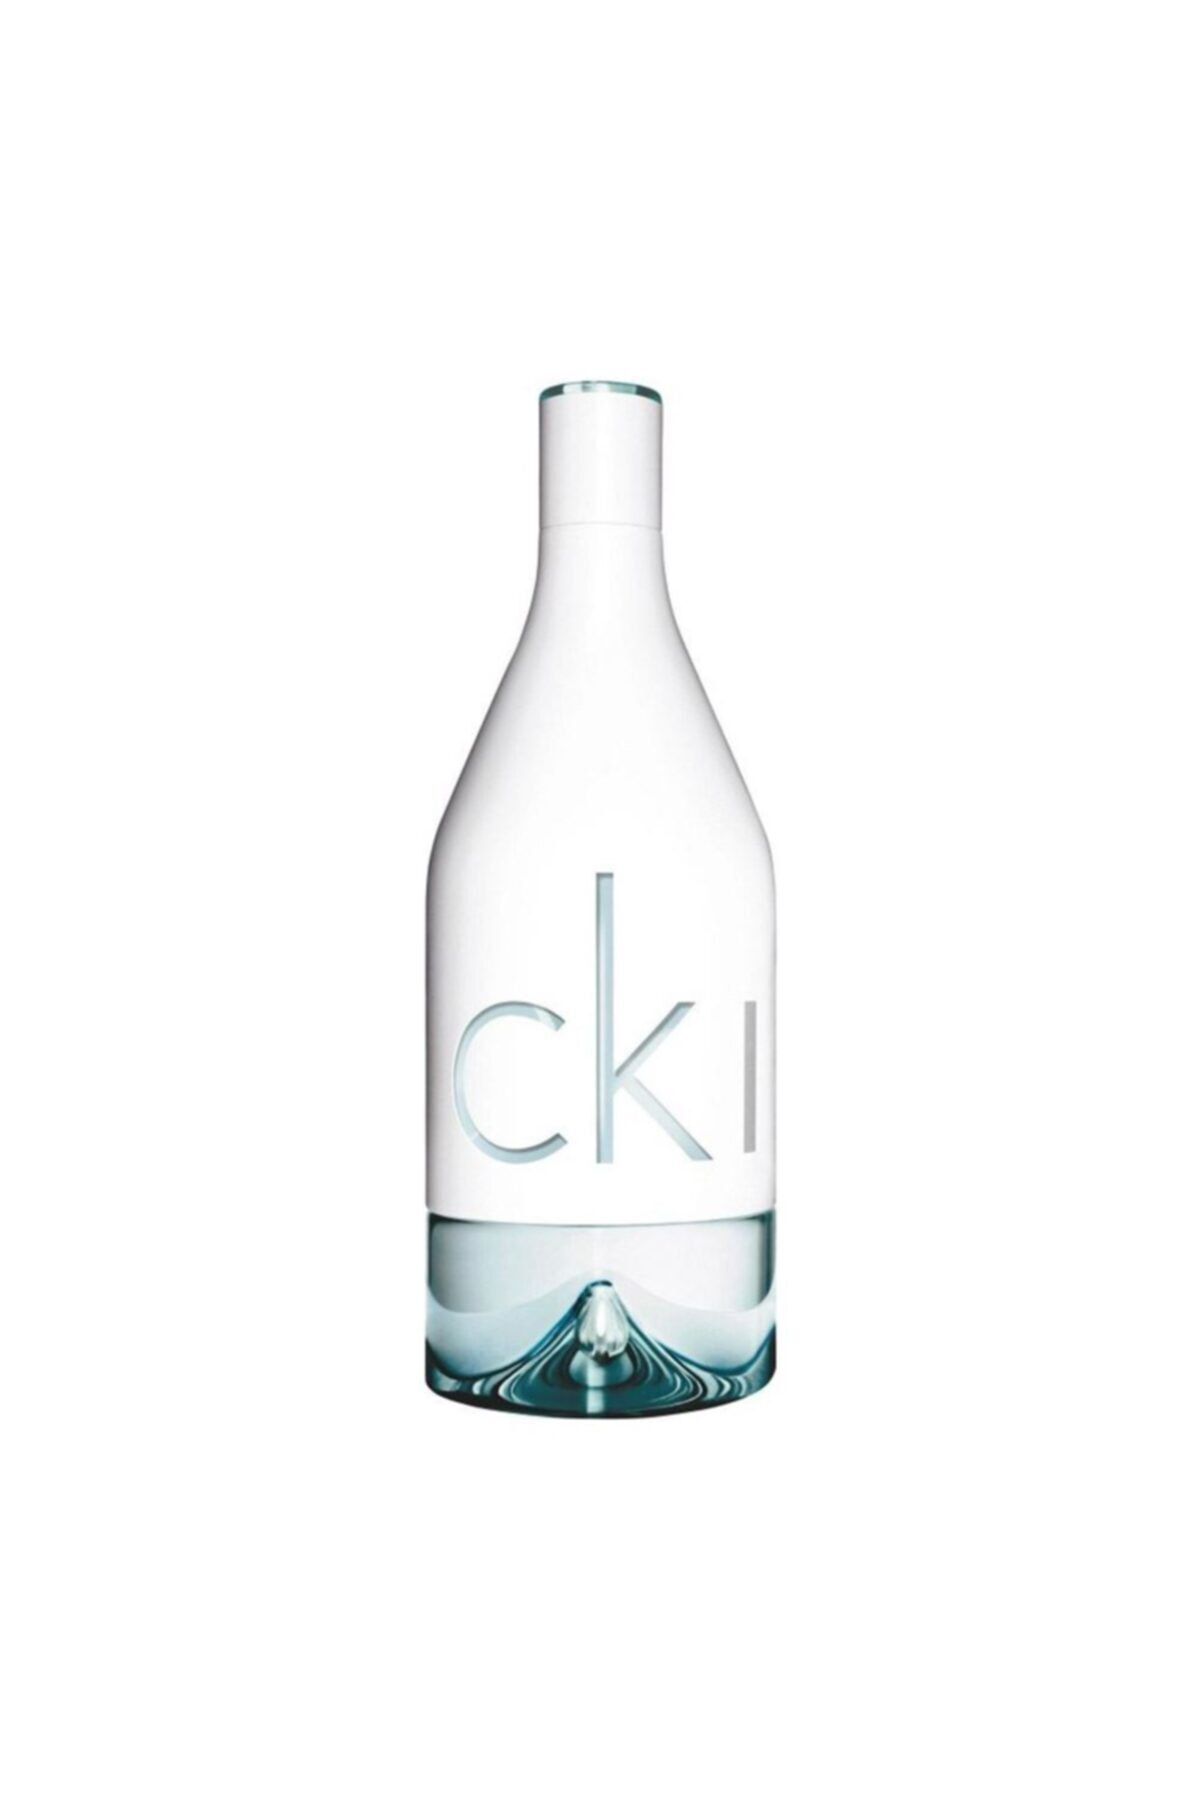 Calvin Klein Ck In2u مردانه ادوتویلت 100 ml عطر